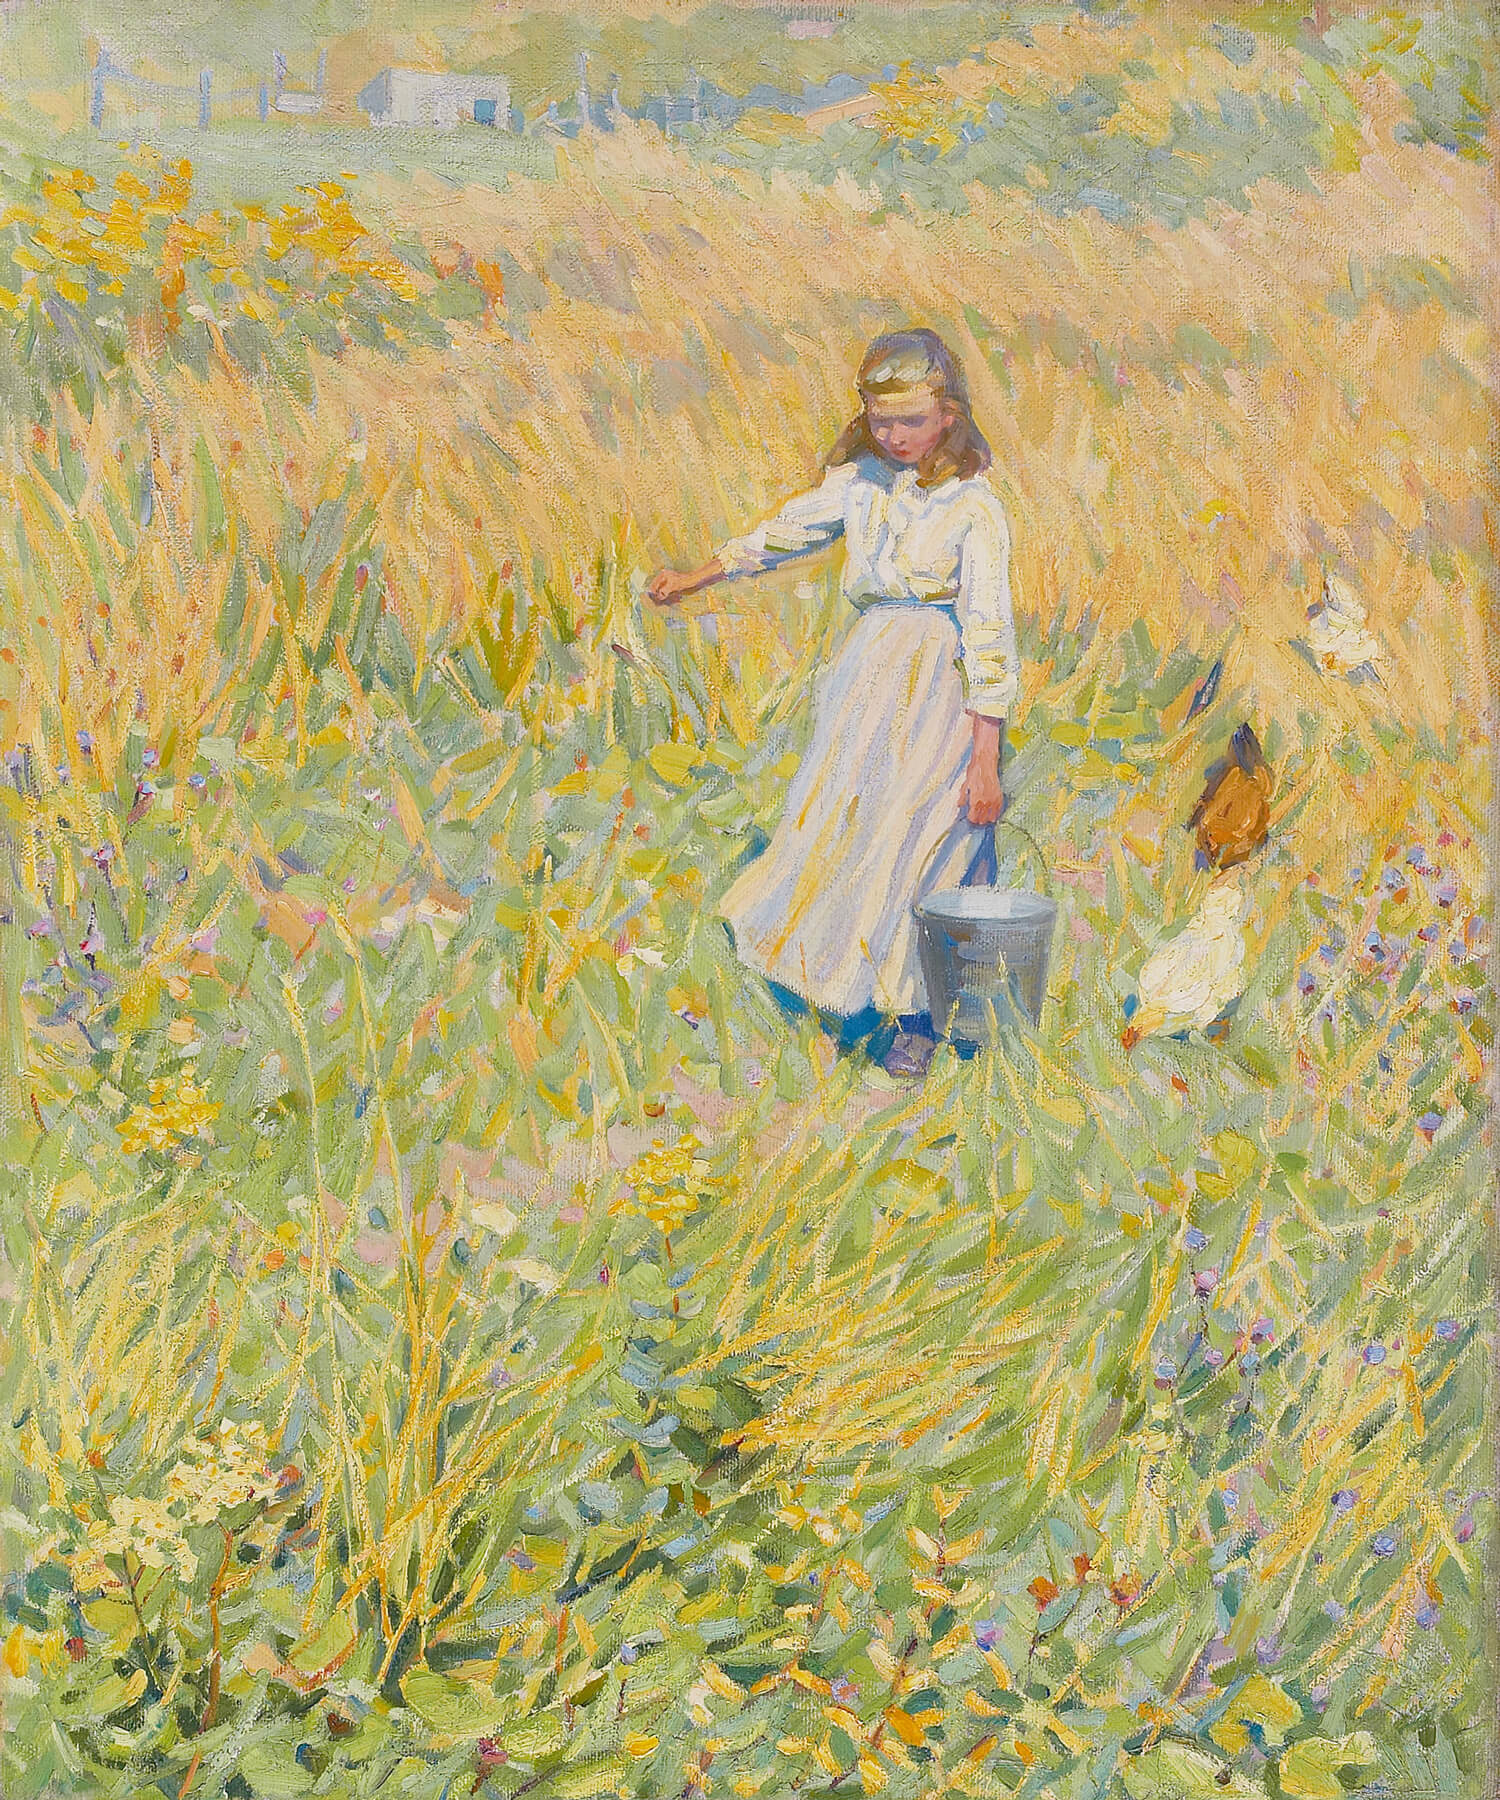 Helen McNicoll, The Little Worker, c. 1907